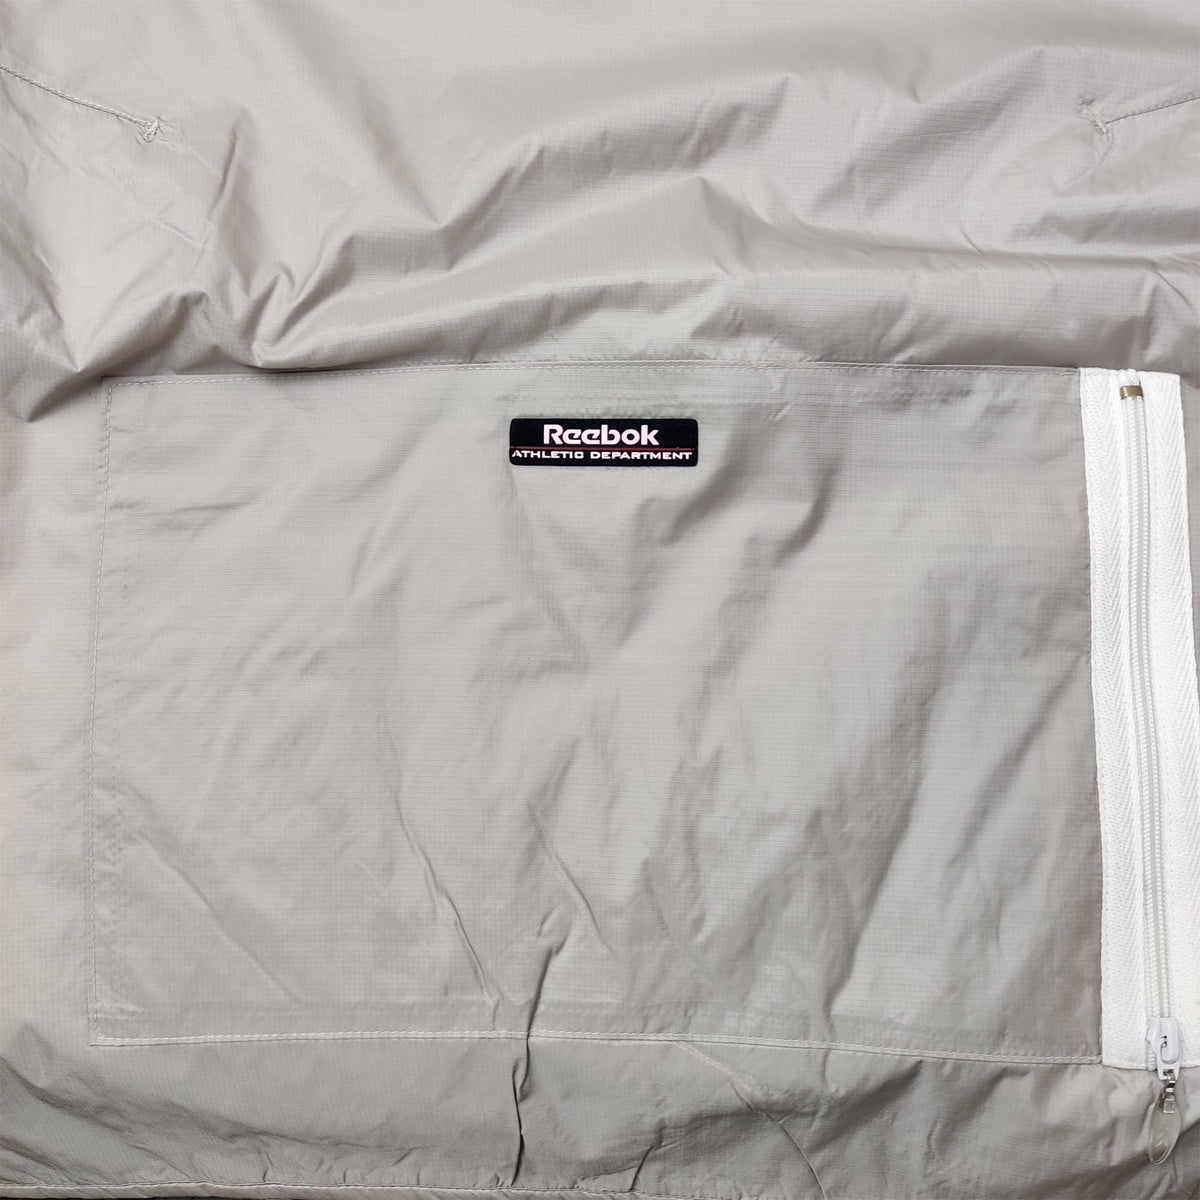 Reebok Womens Retro Original Mid 90's Shoulder Zip Jacket - Silver - UK Size 12